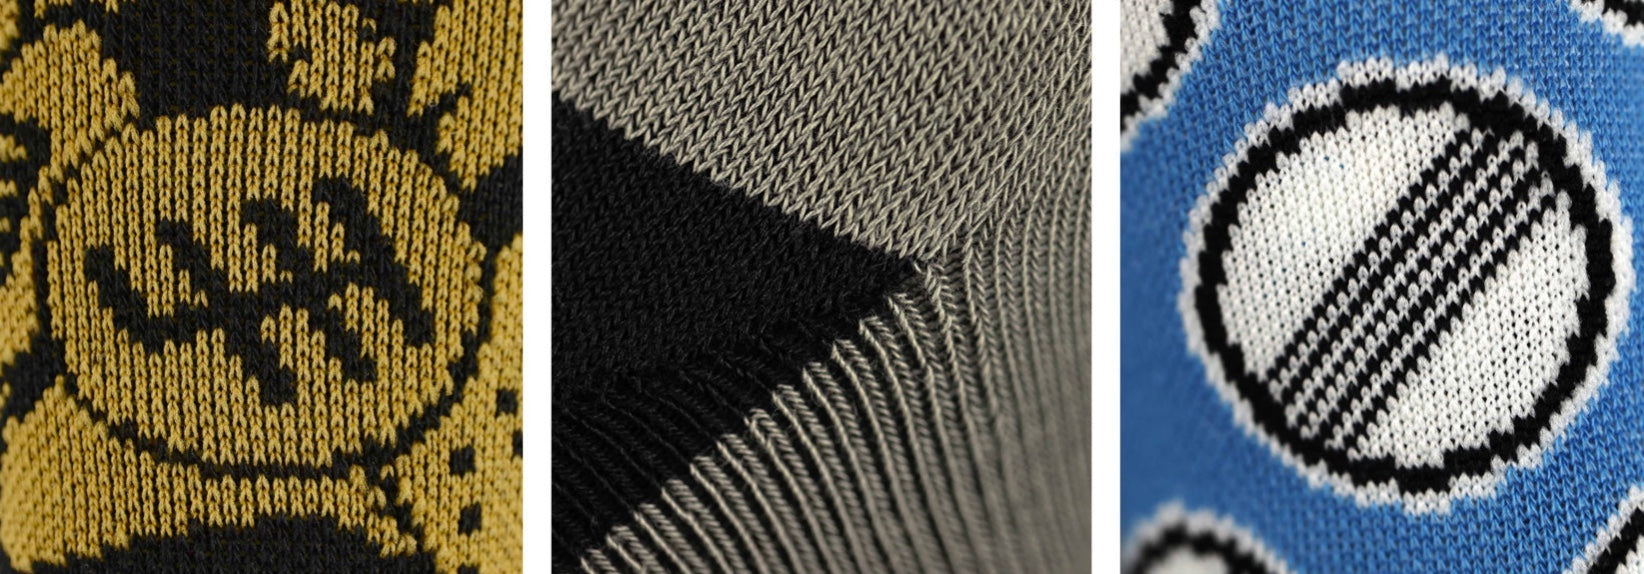 Detail close-up photos of the three socks.